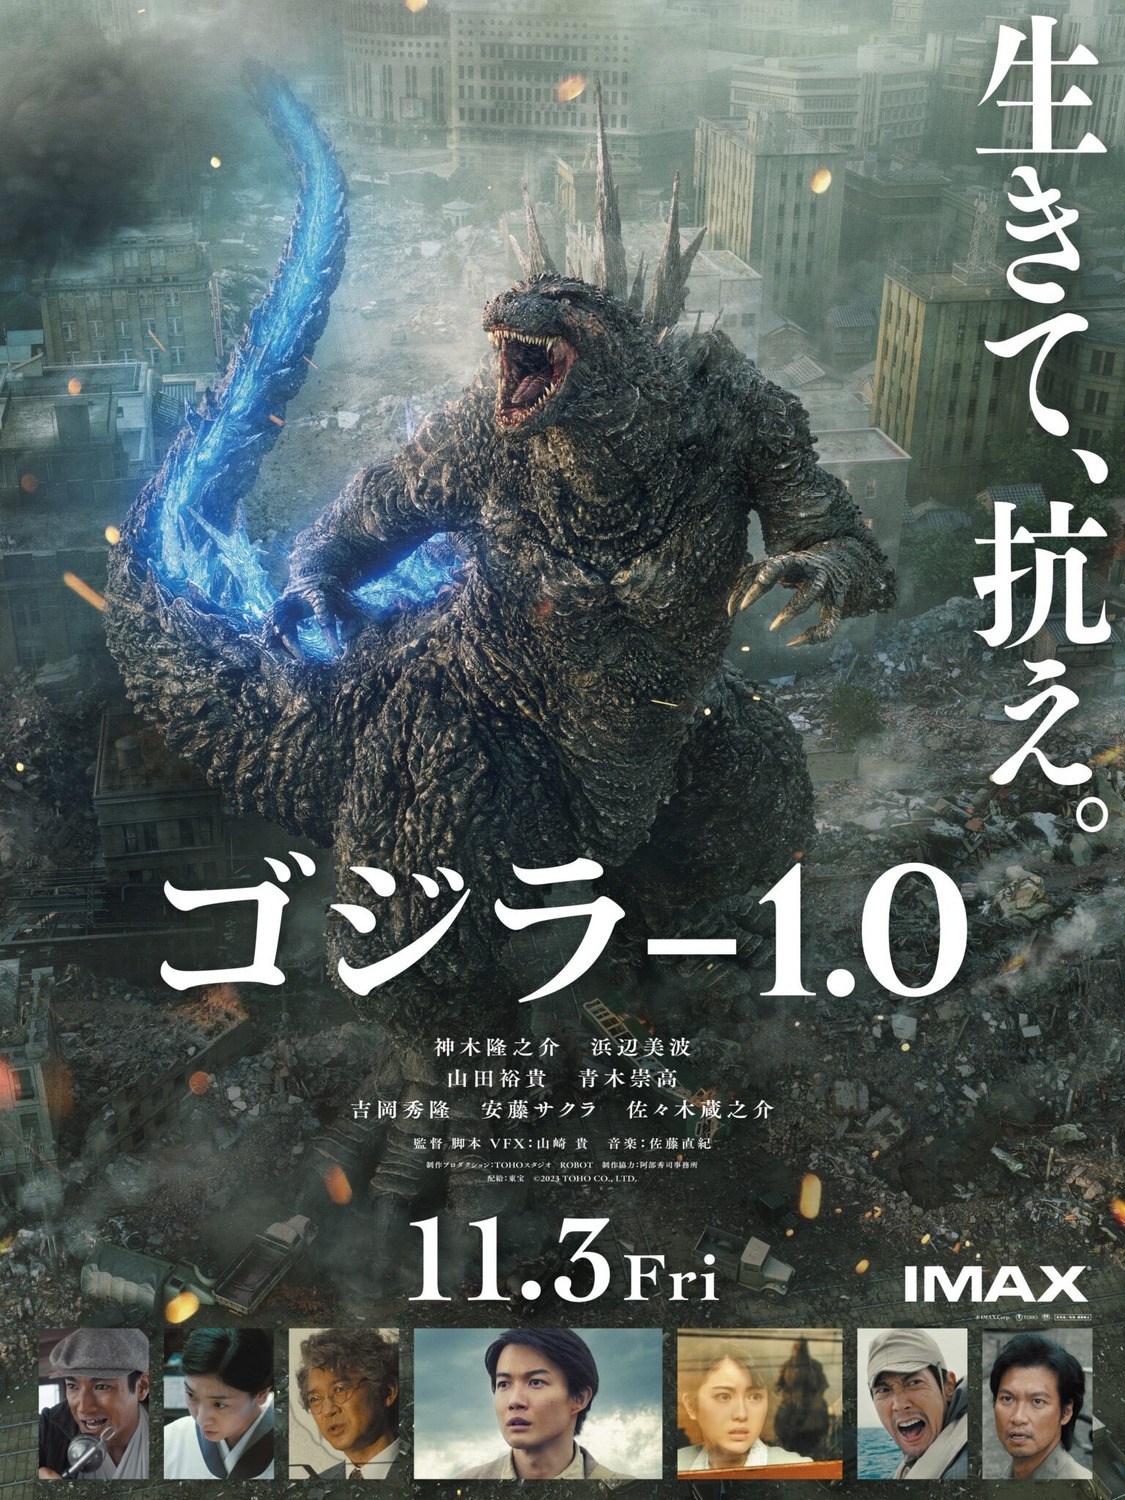 Extra Large Movie Poster Image for Godzilla: Minus One (#7 of 11)